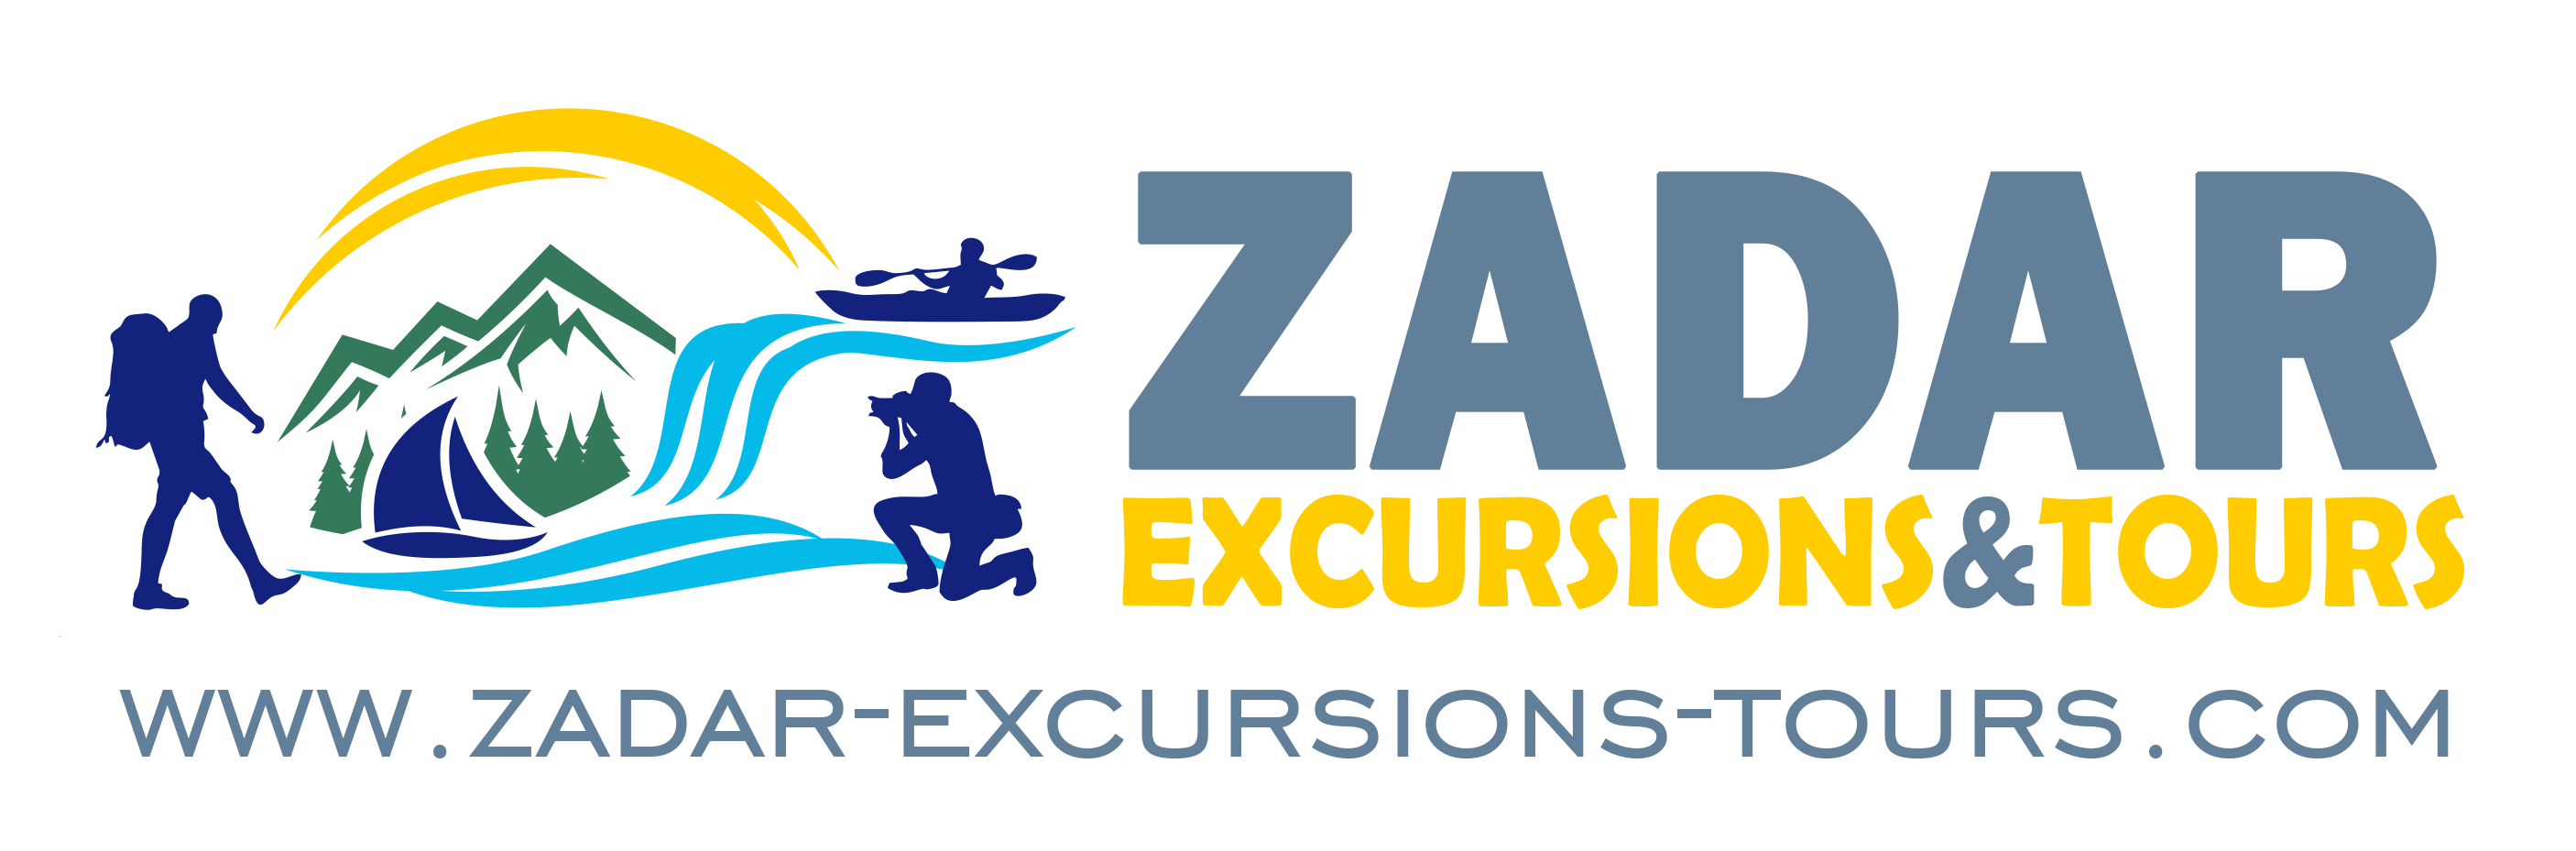 Zadar Excursions & Tours